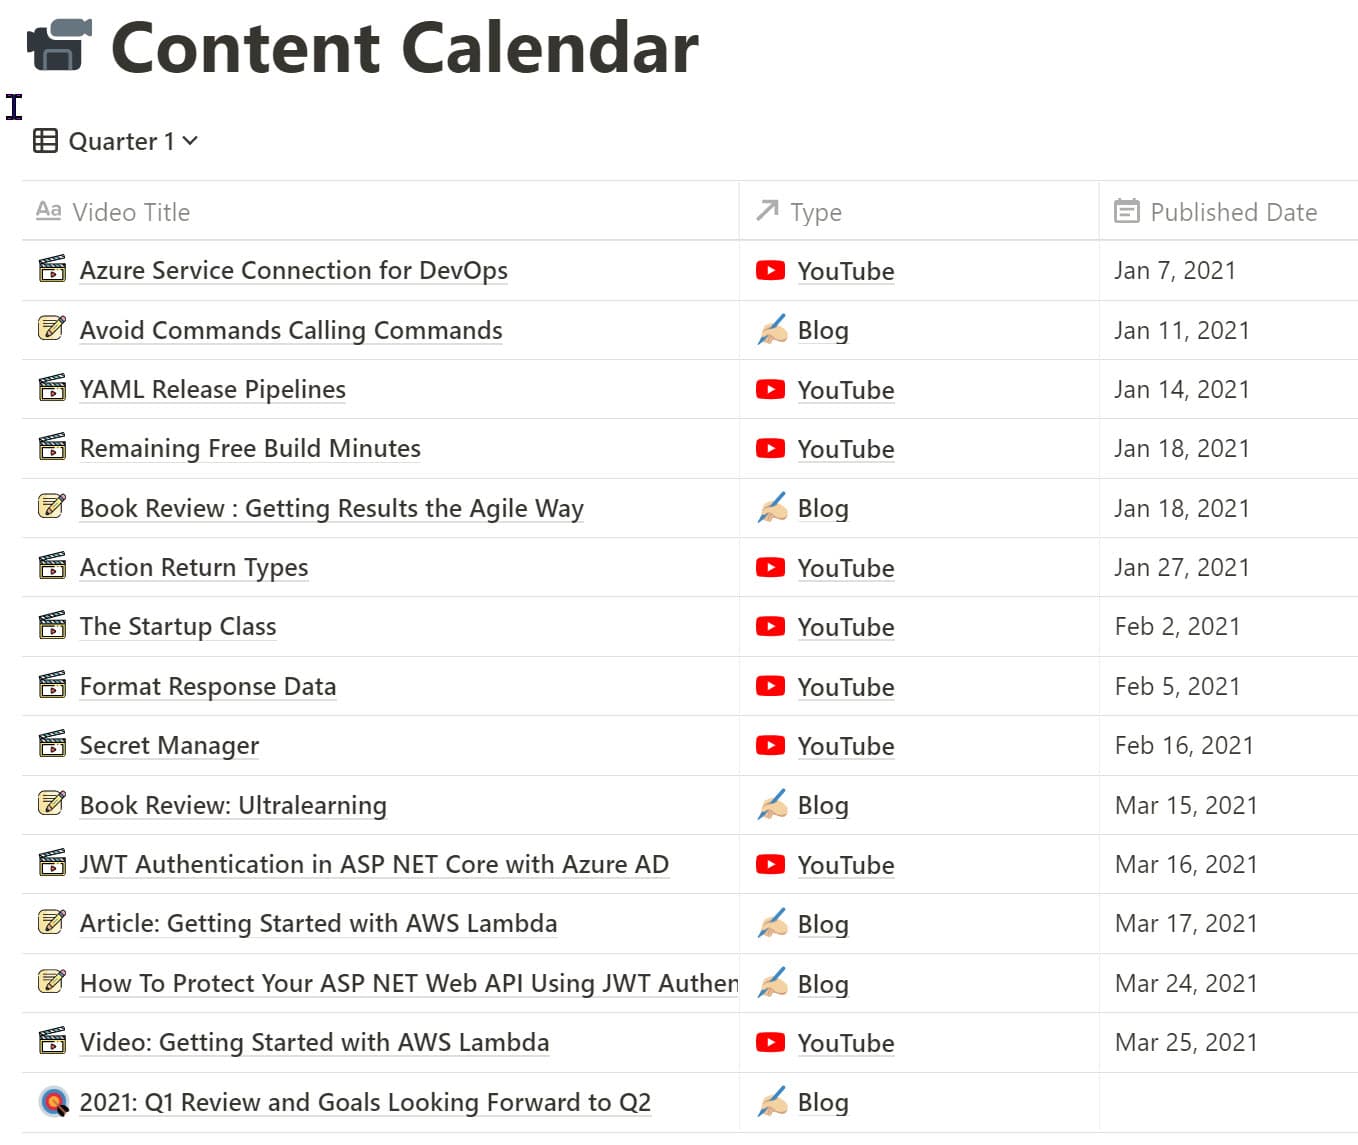 Content Calendar for Q1, 2021